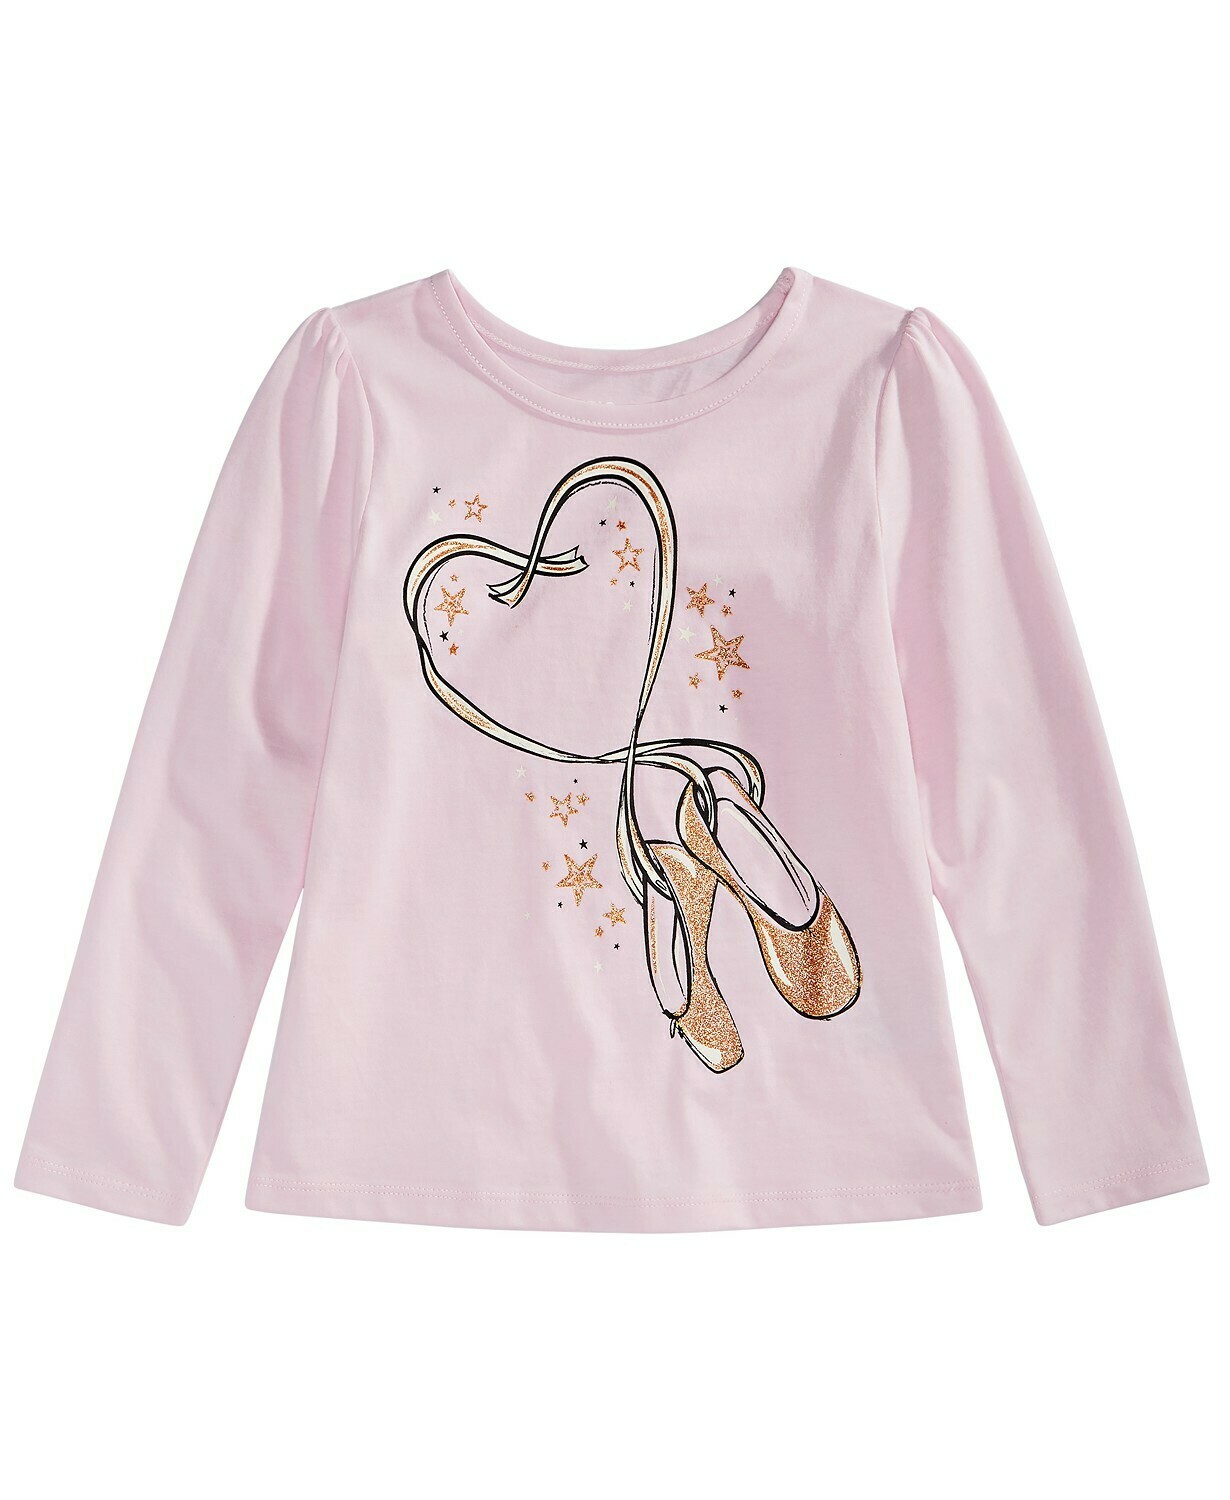 Epic Threads Toddler Girls Ballet Slippers T-Shirt